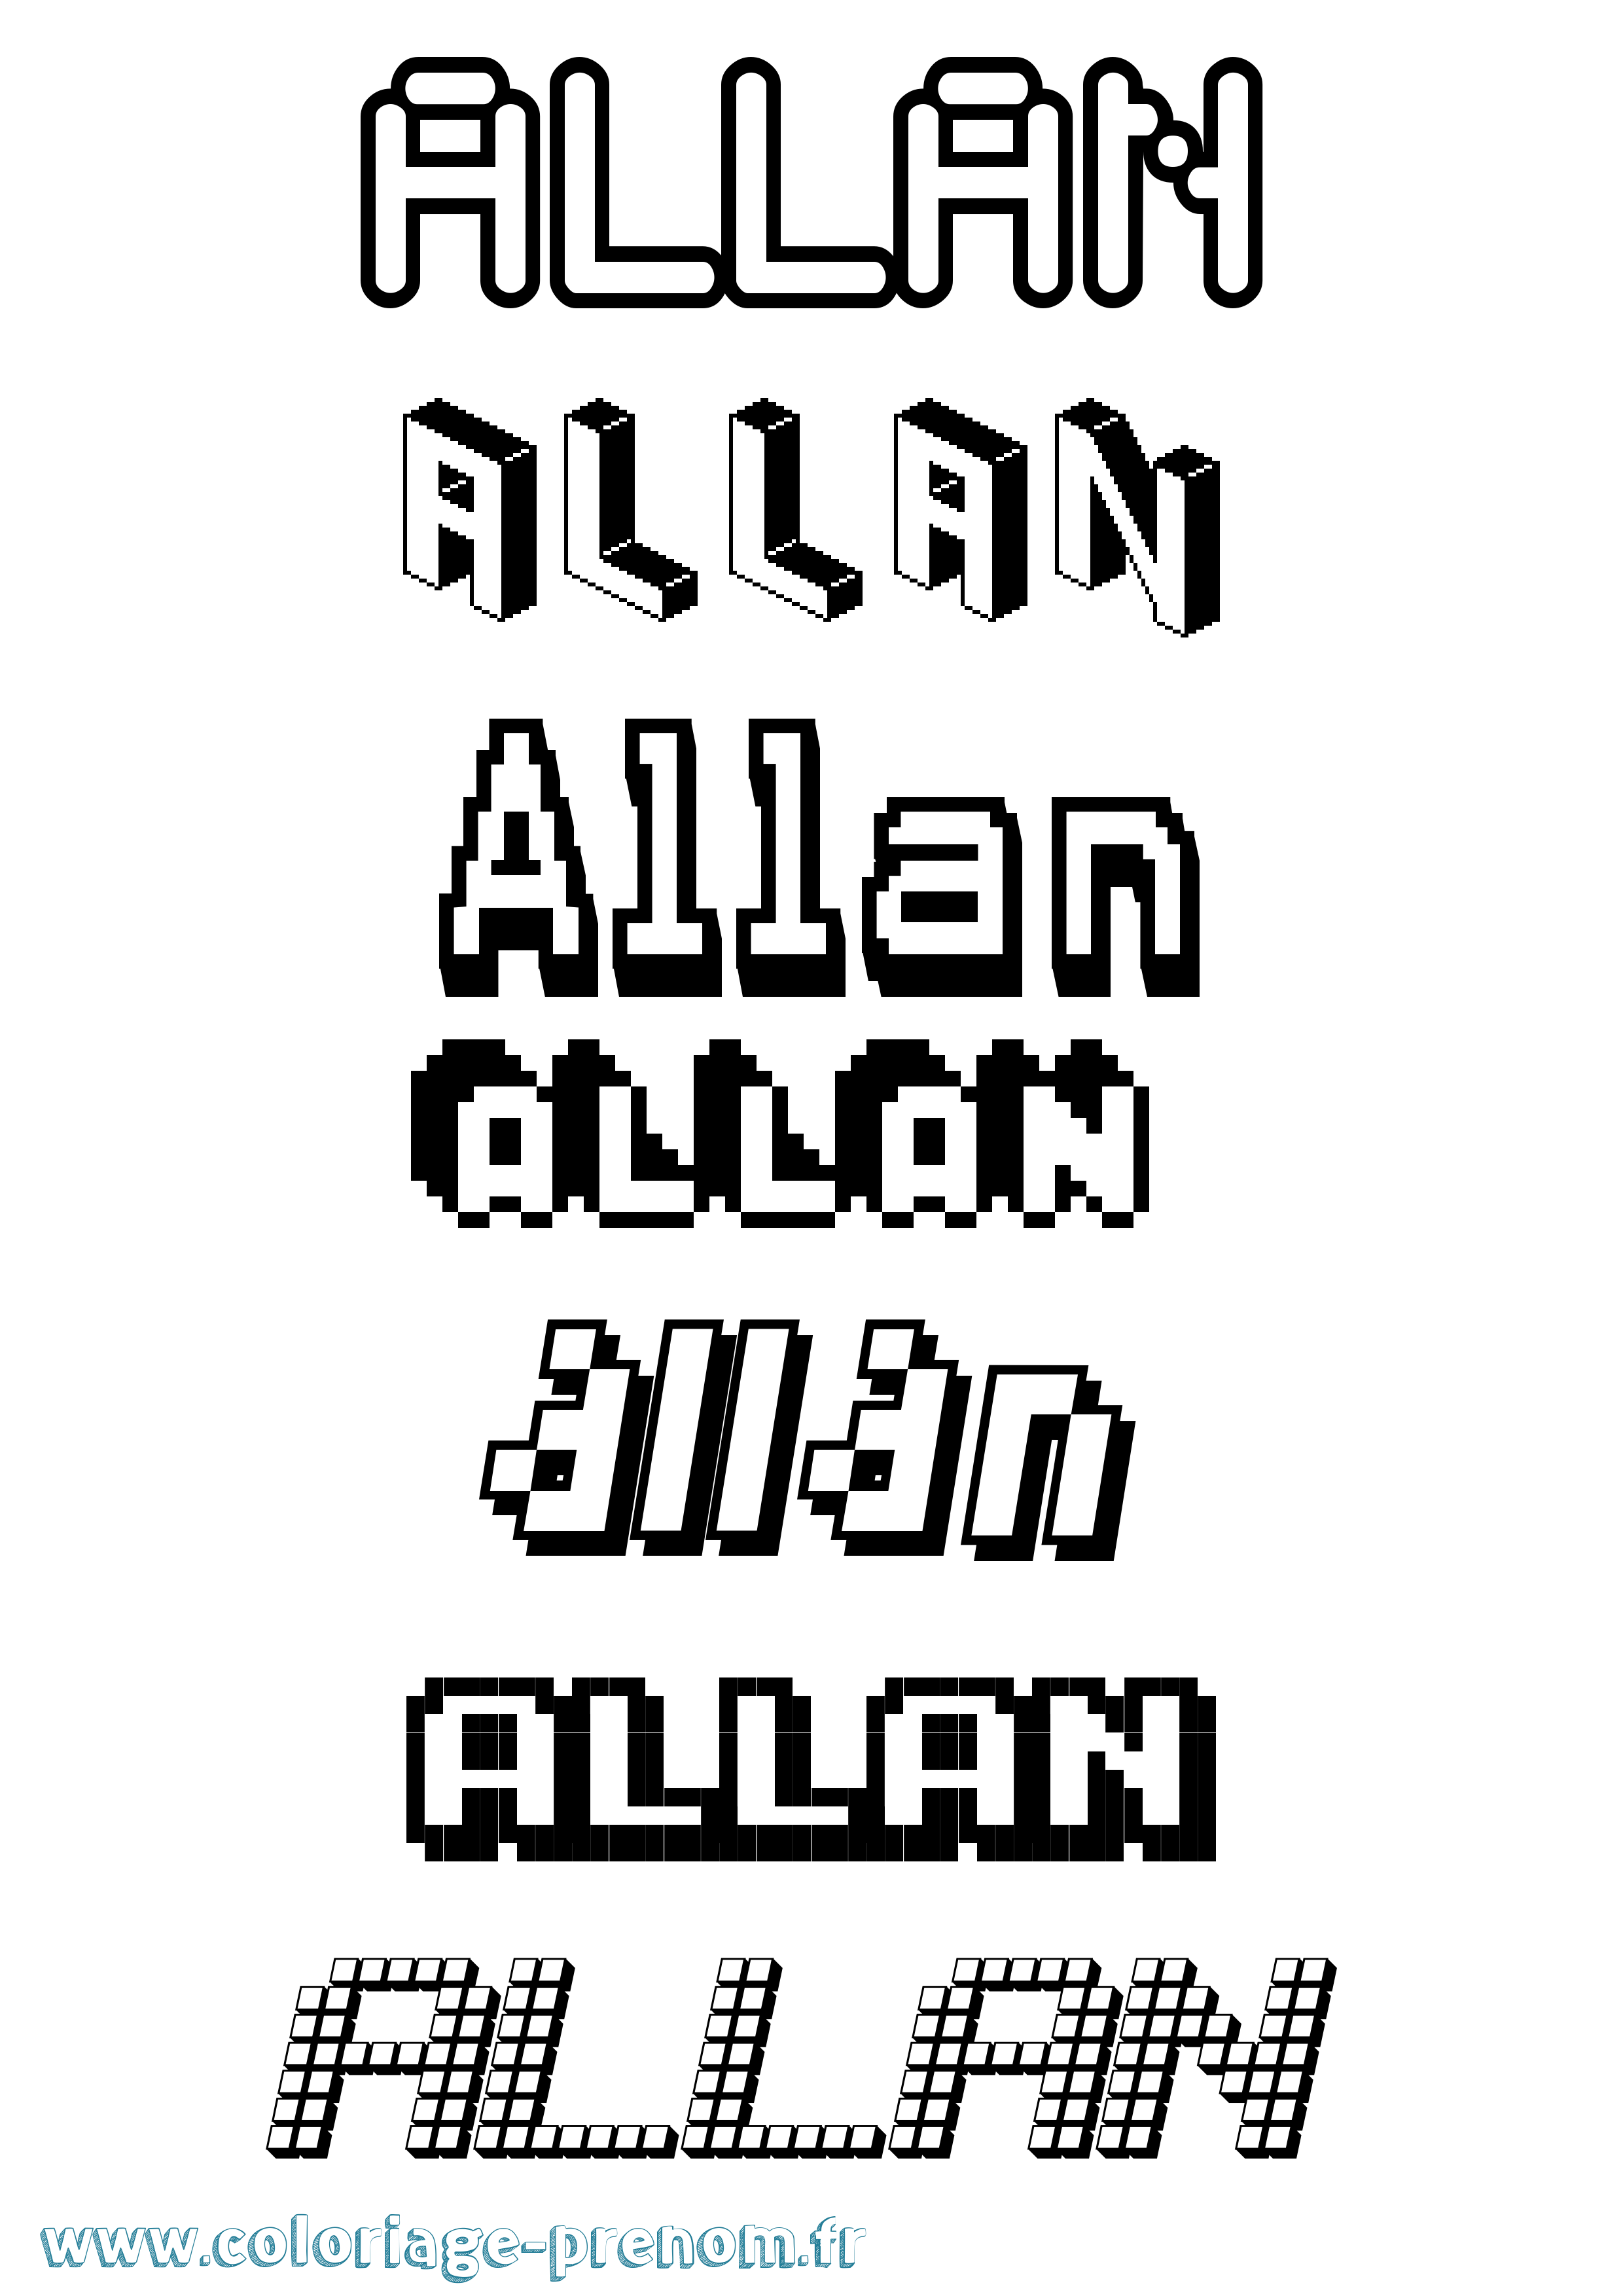 Coloriage prénom Allan Pixel